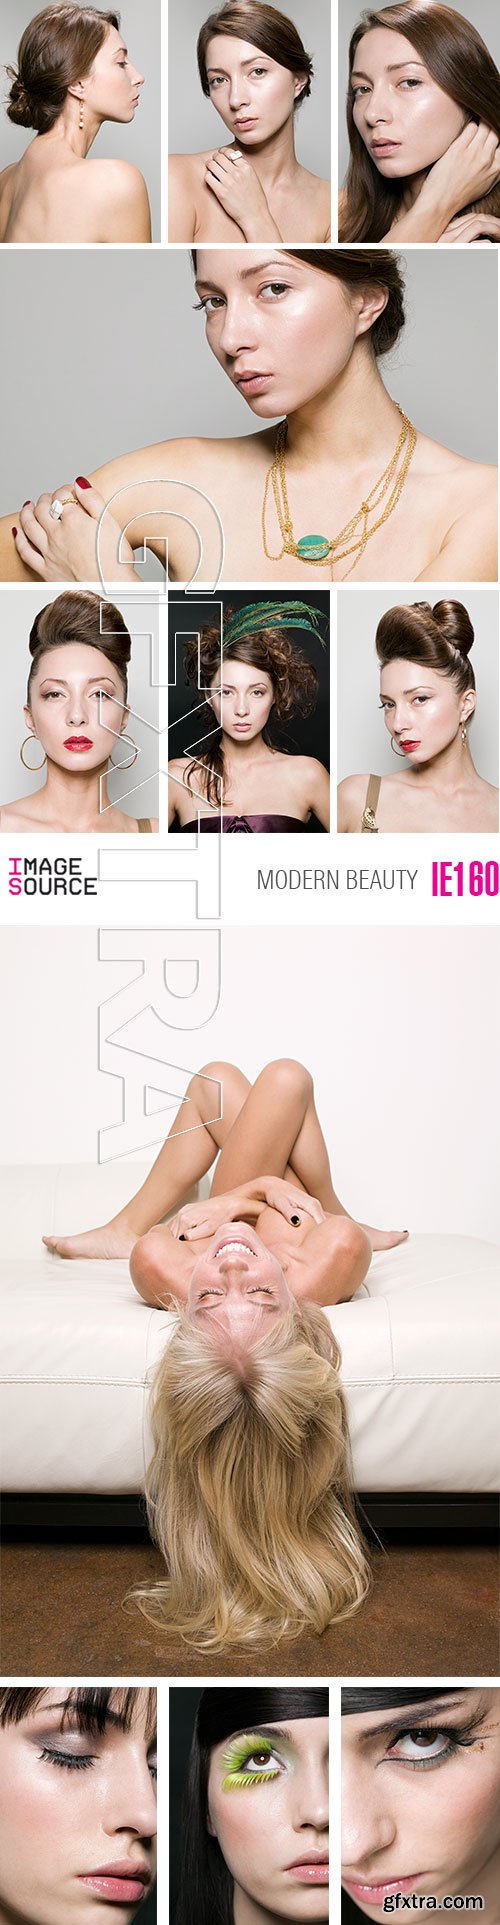 Image Source IE160 Modern Beauty